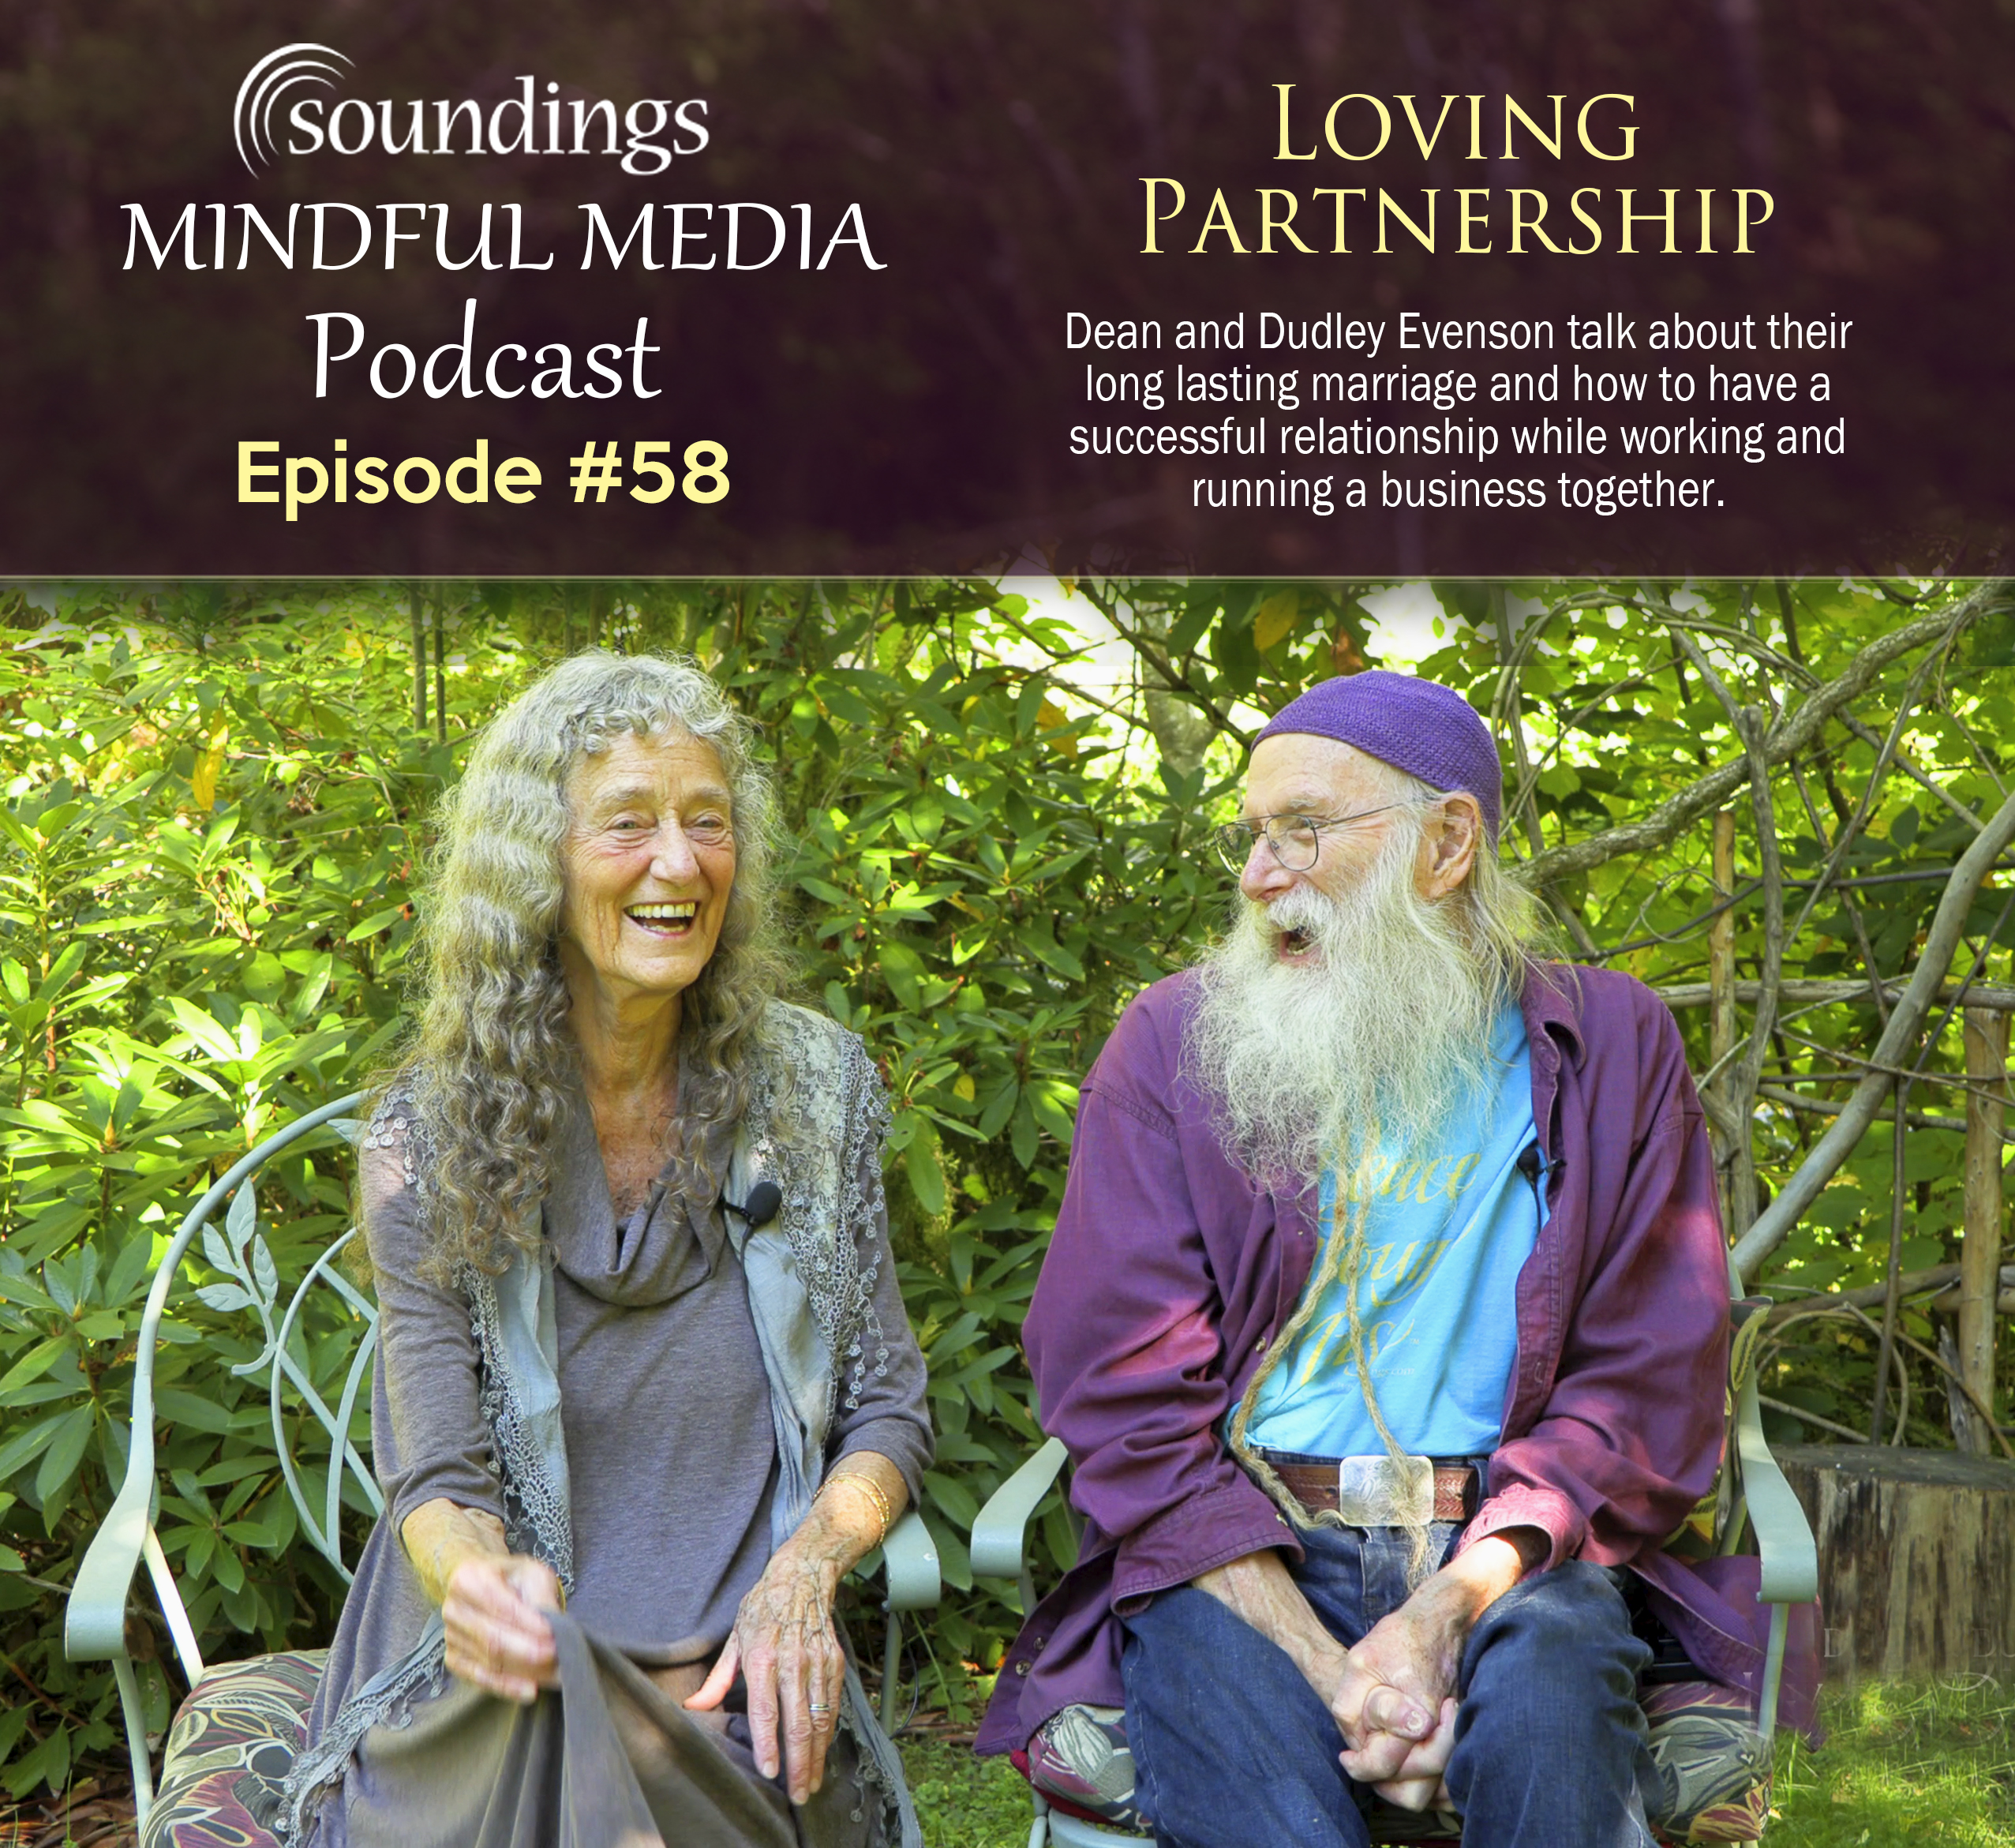 Dean & Dudley Evenson Talk Loving Partnership on Soundings Mindful Media